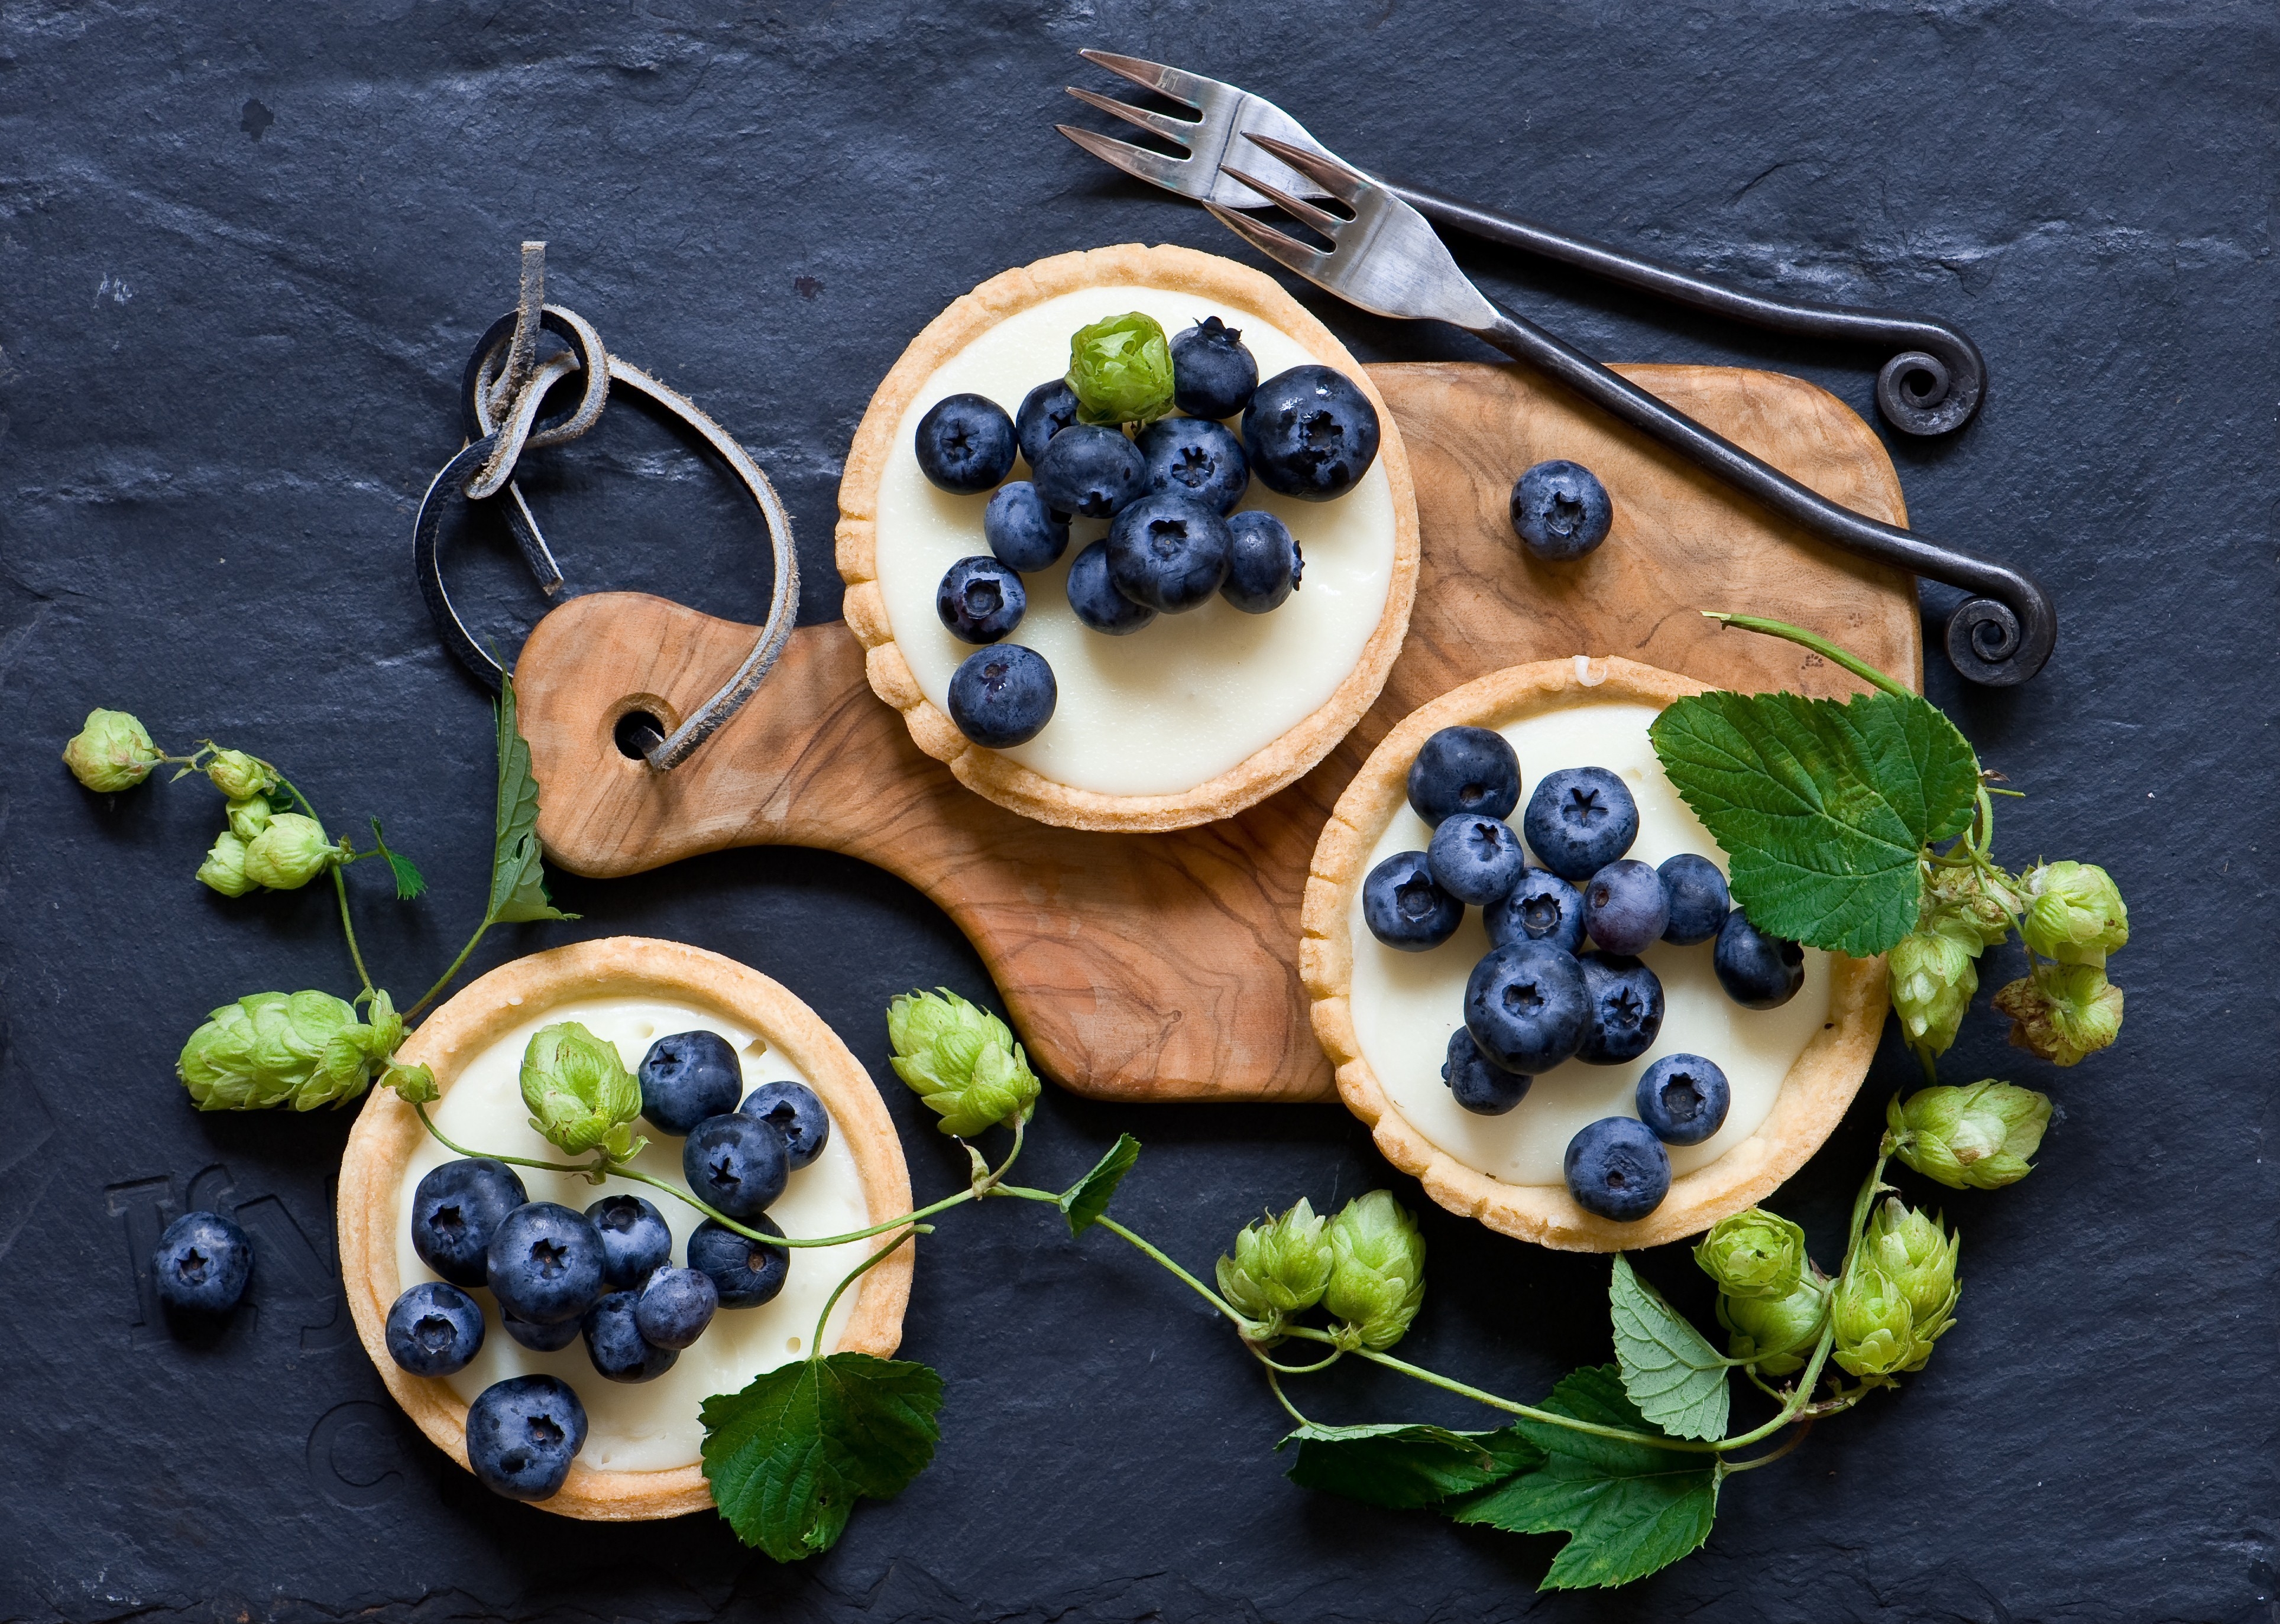 Wild blueberries on plates